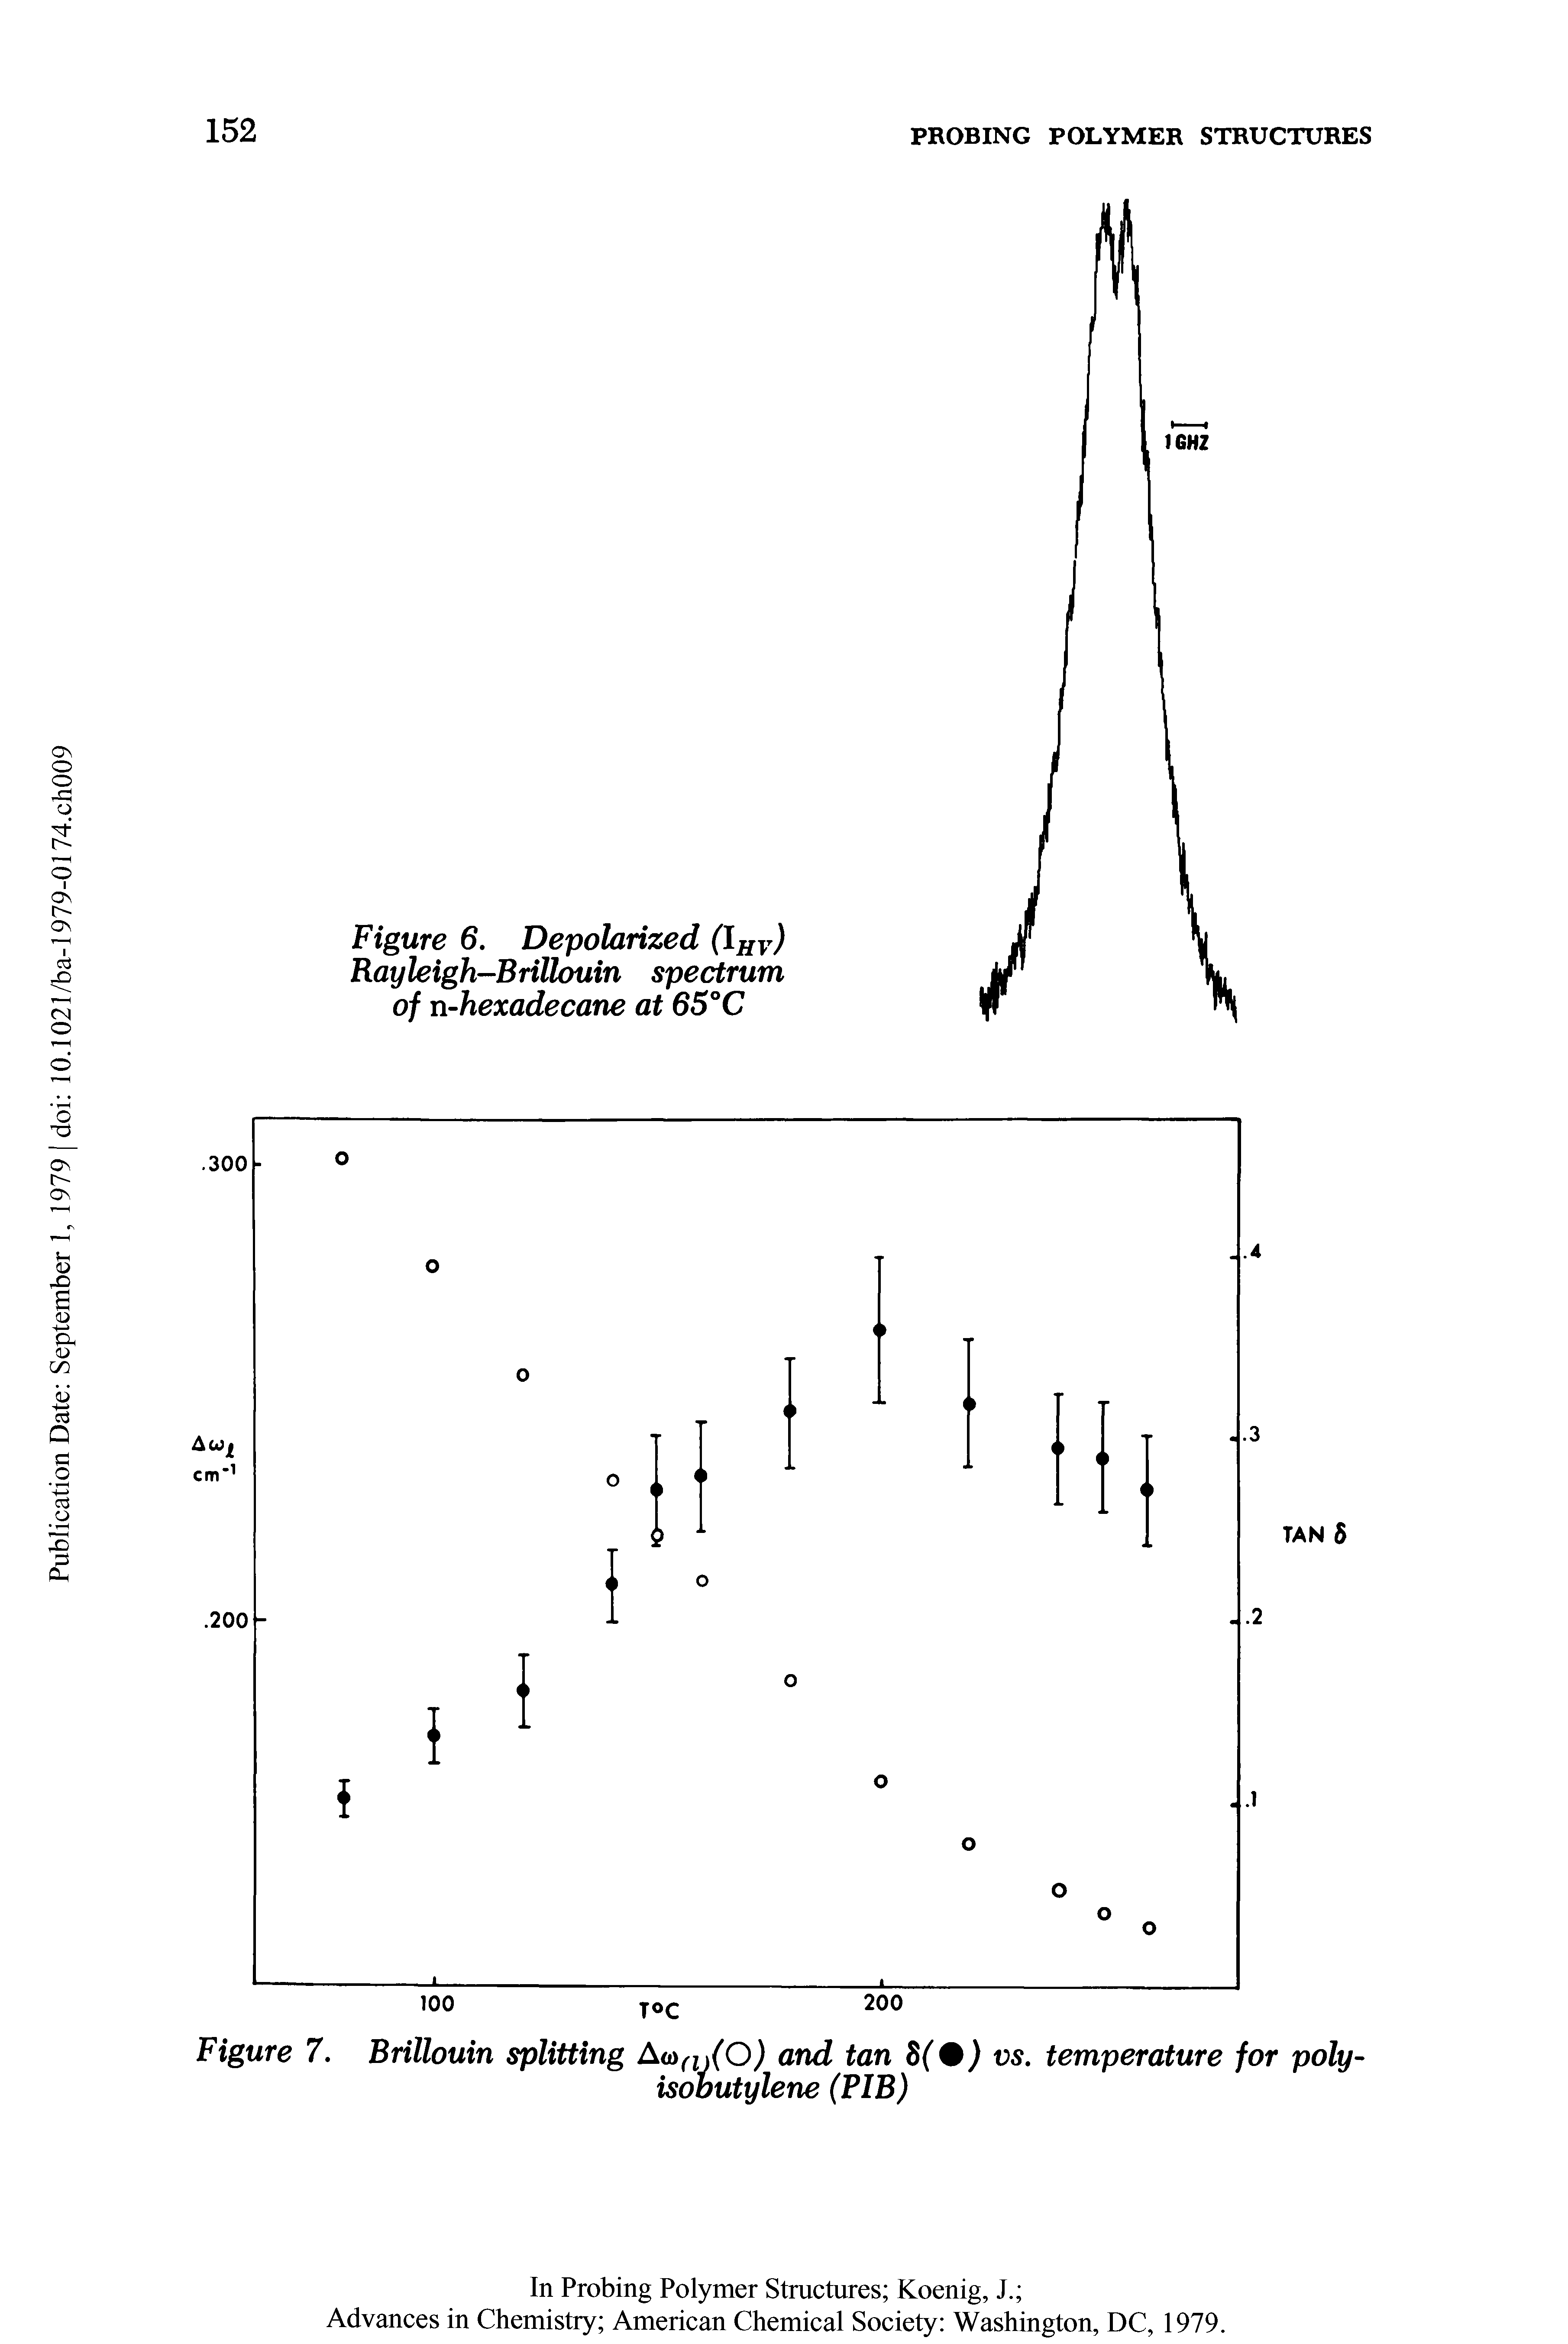 Figure 6. Depolarized (Ihv) Rayhigh-Brillouiri spectrum of n-hexadecane at 65°C...